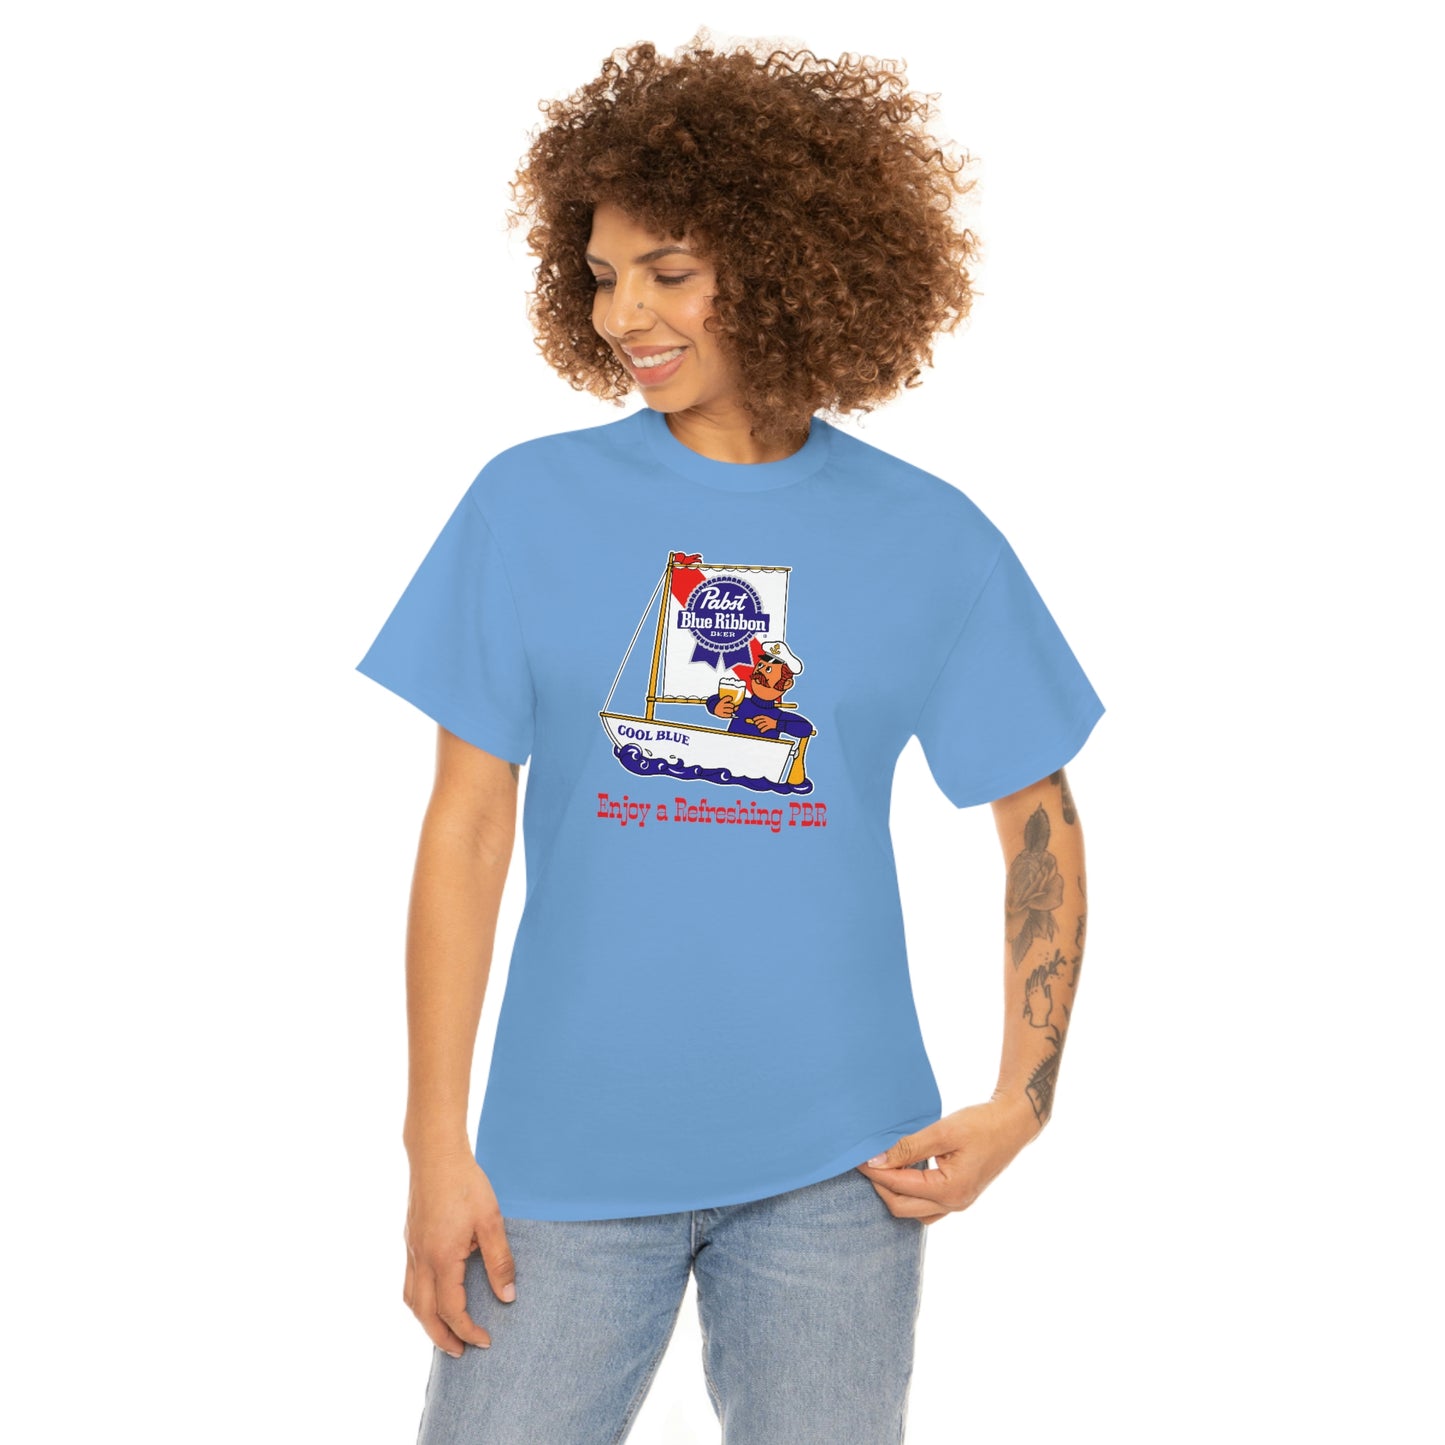 Pabst Blue Ribbon T-Shirt